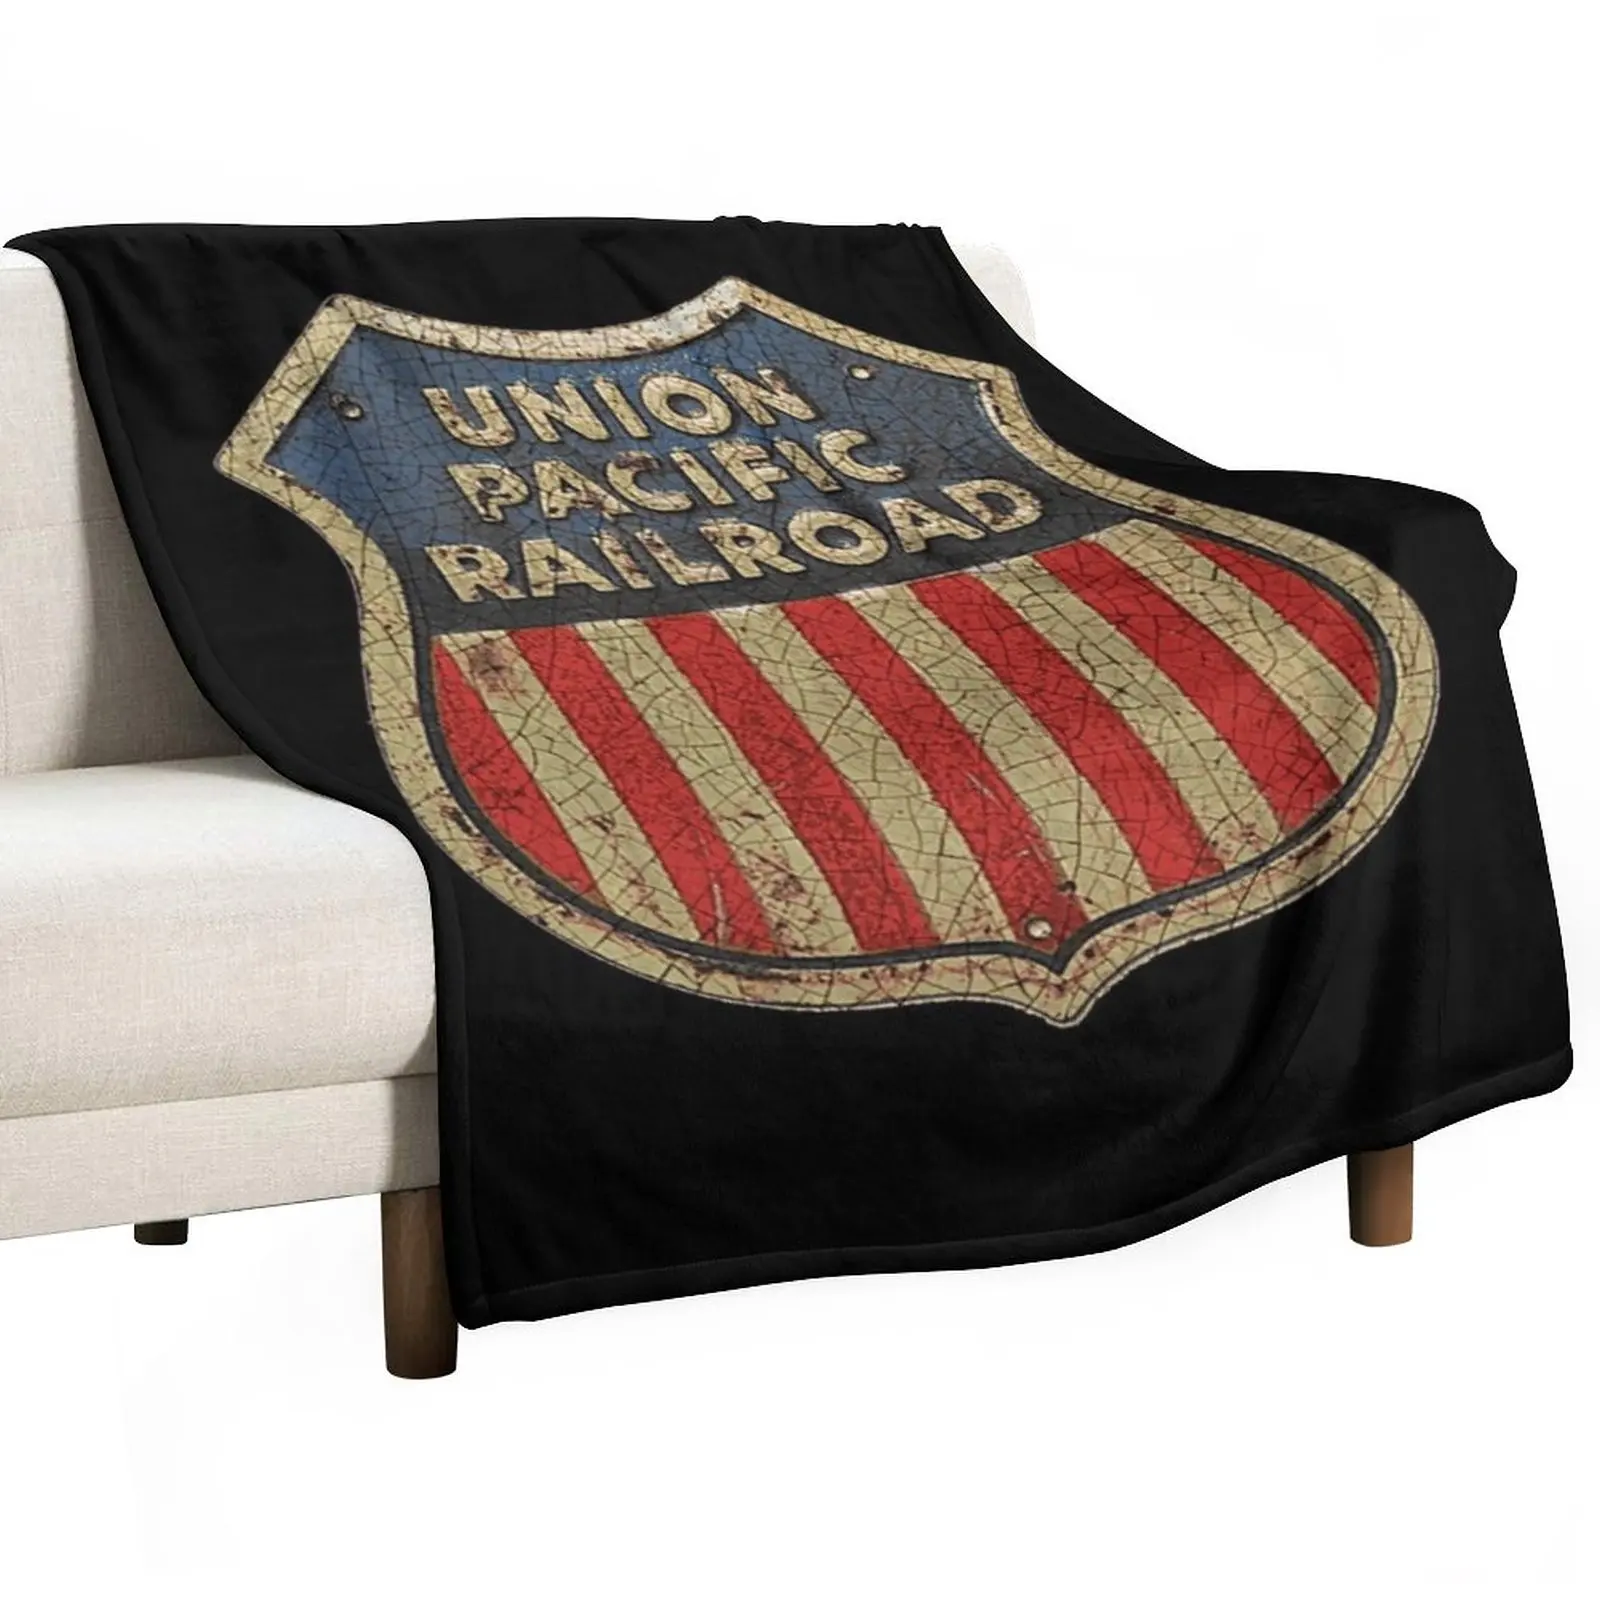 

Union Pacific Railroad Throw Blanket Flannels Blanket Plaid on the sofa Soft Plaid Designer Blankets